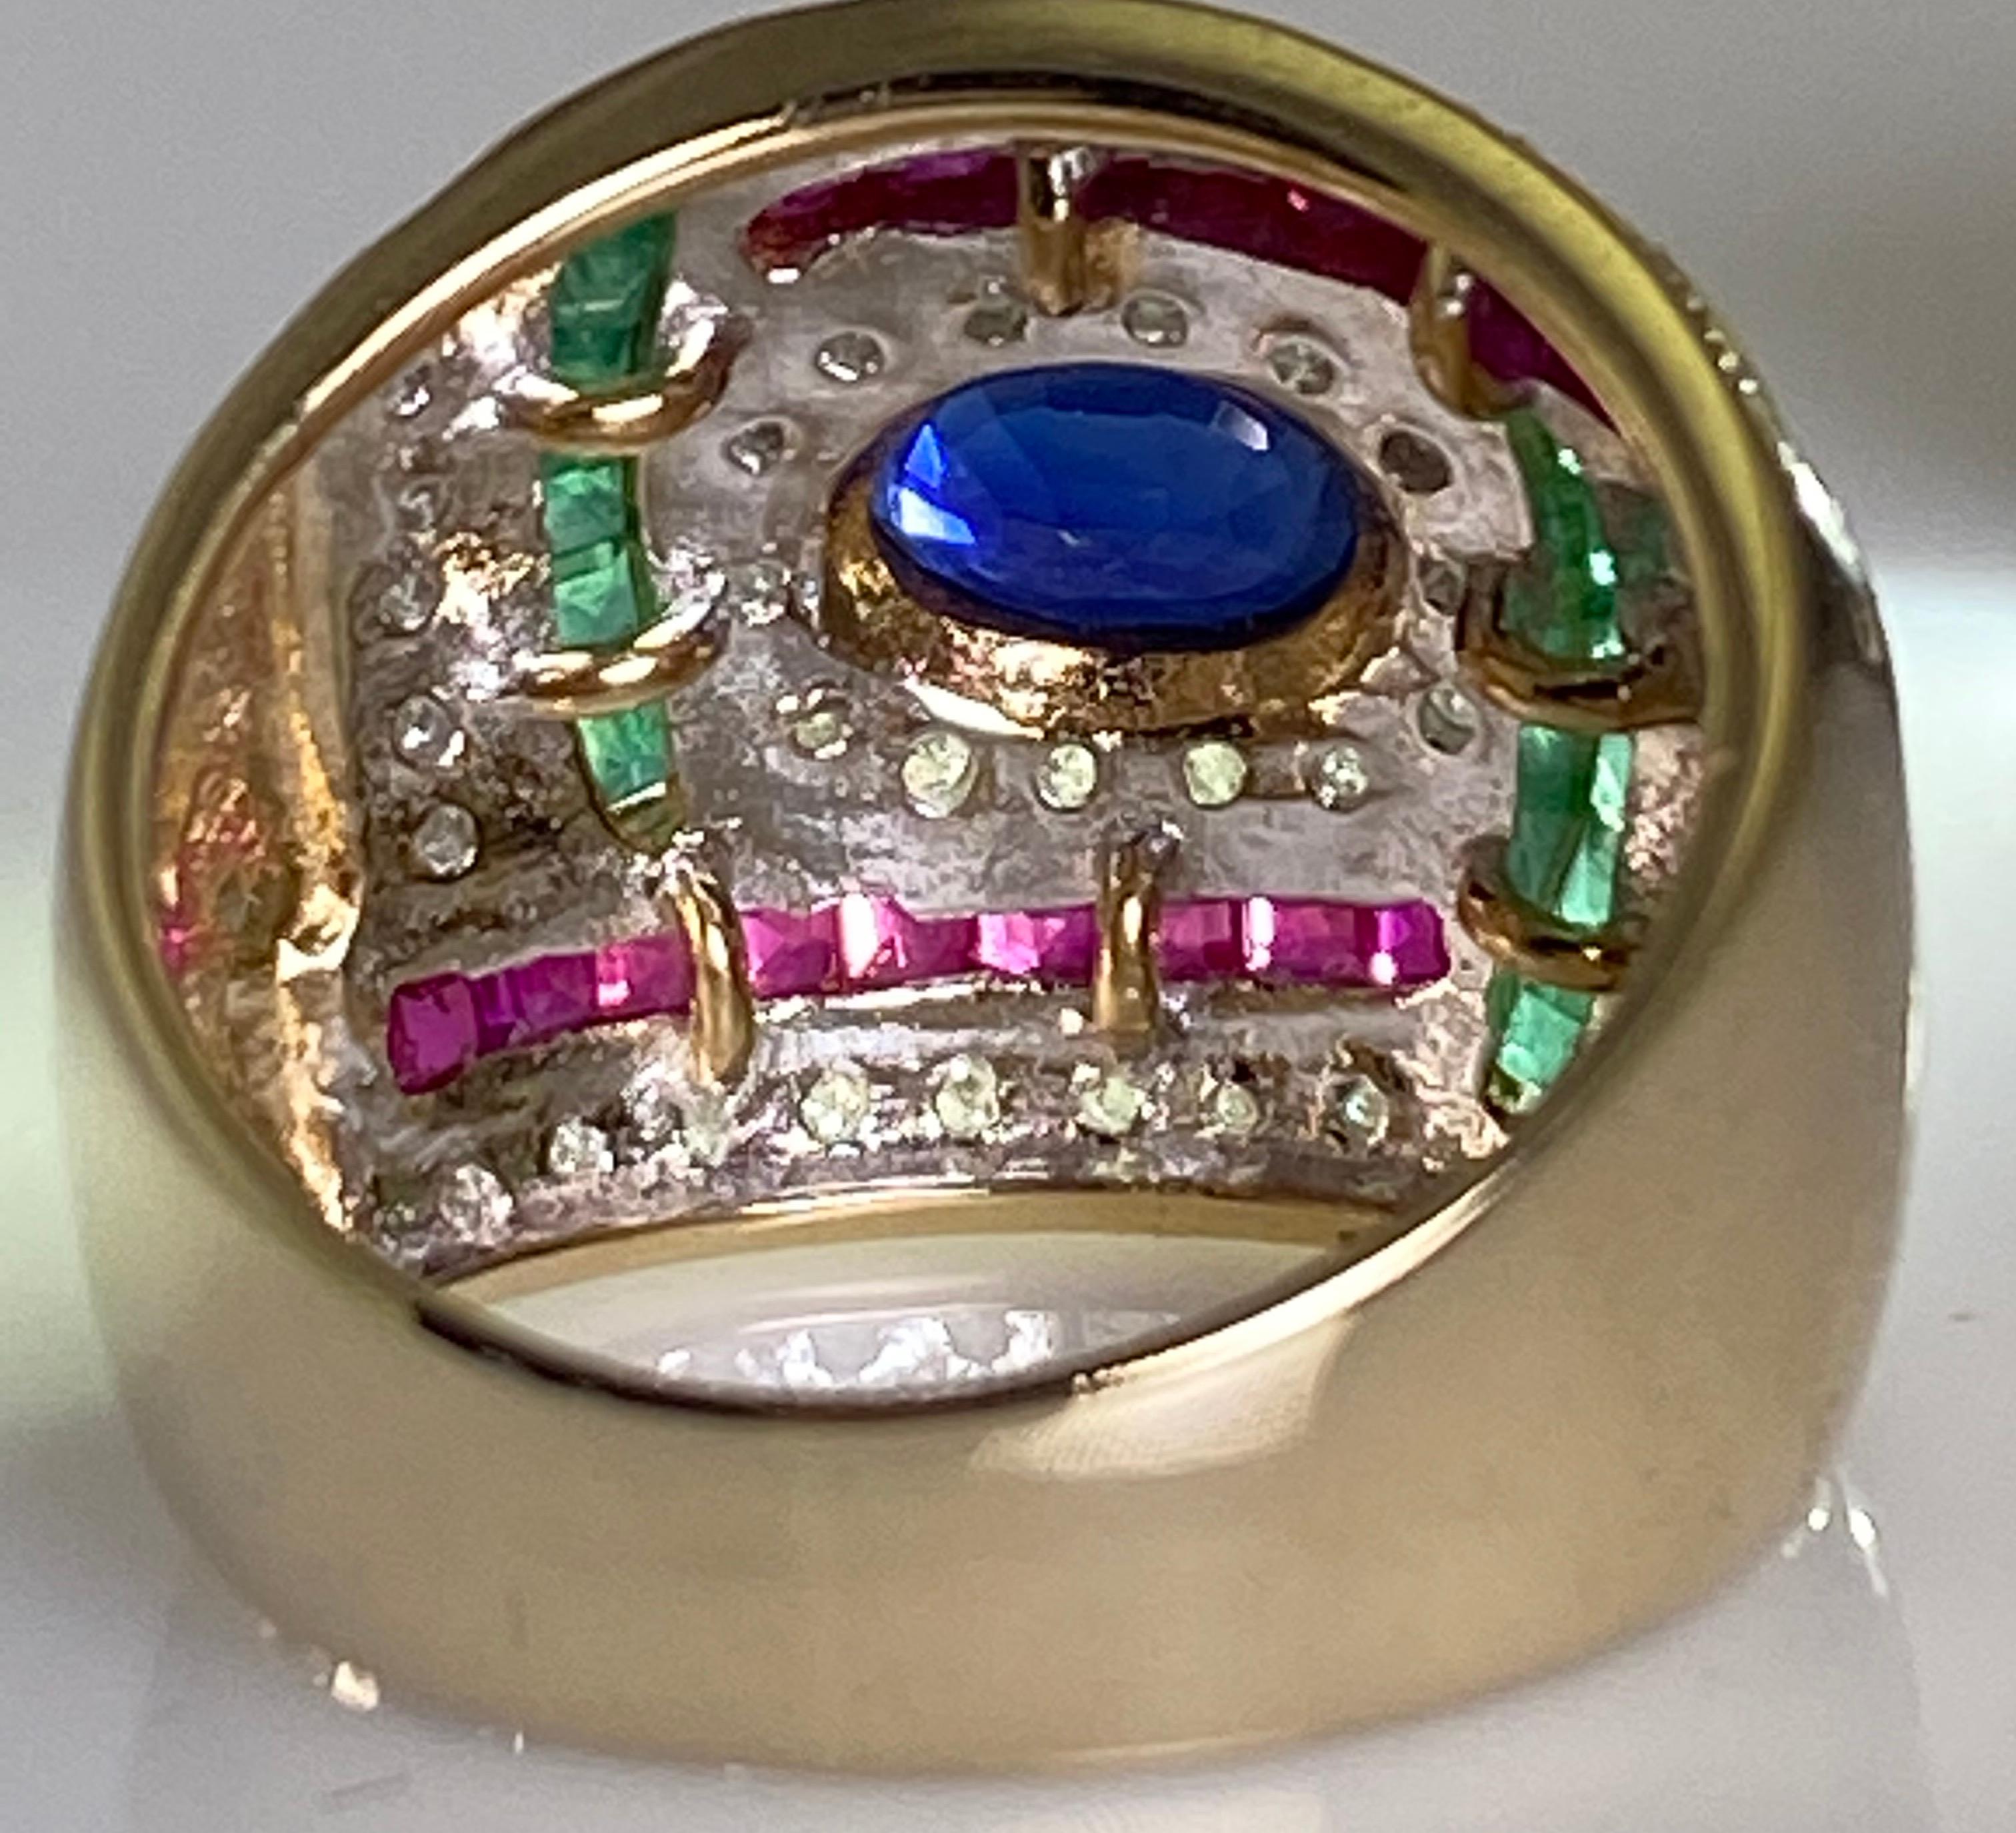 Round Cut Oval Sapphire with Princess Cut Emeralds, Rubies and Round Diamonds 14K YG